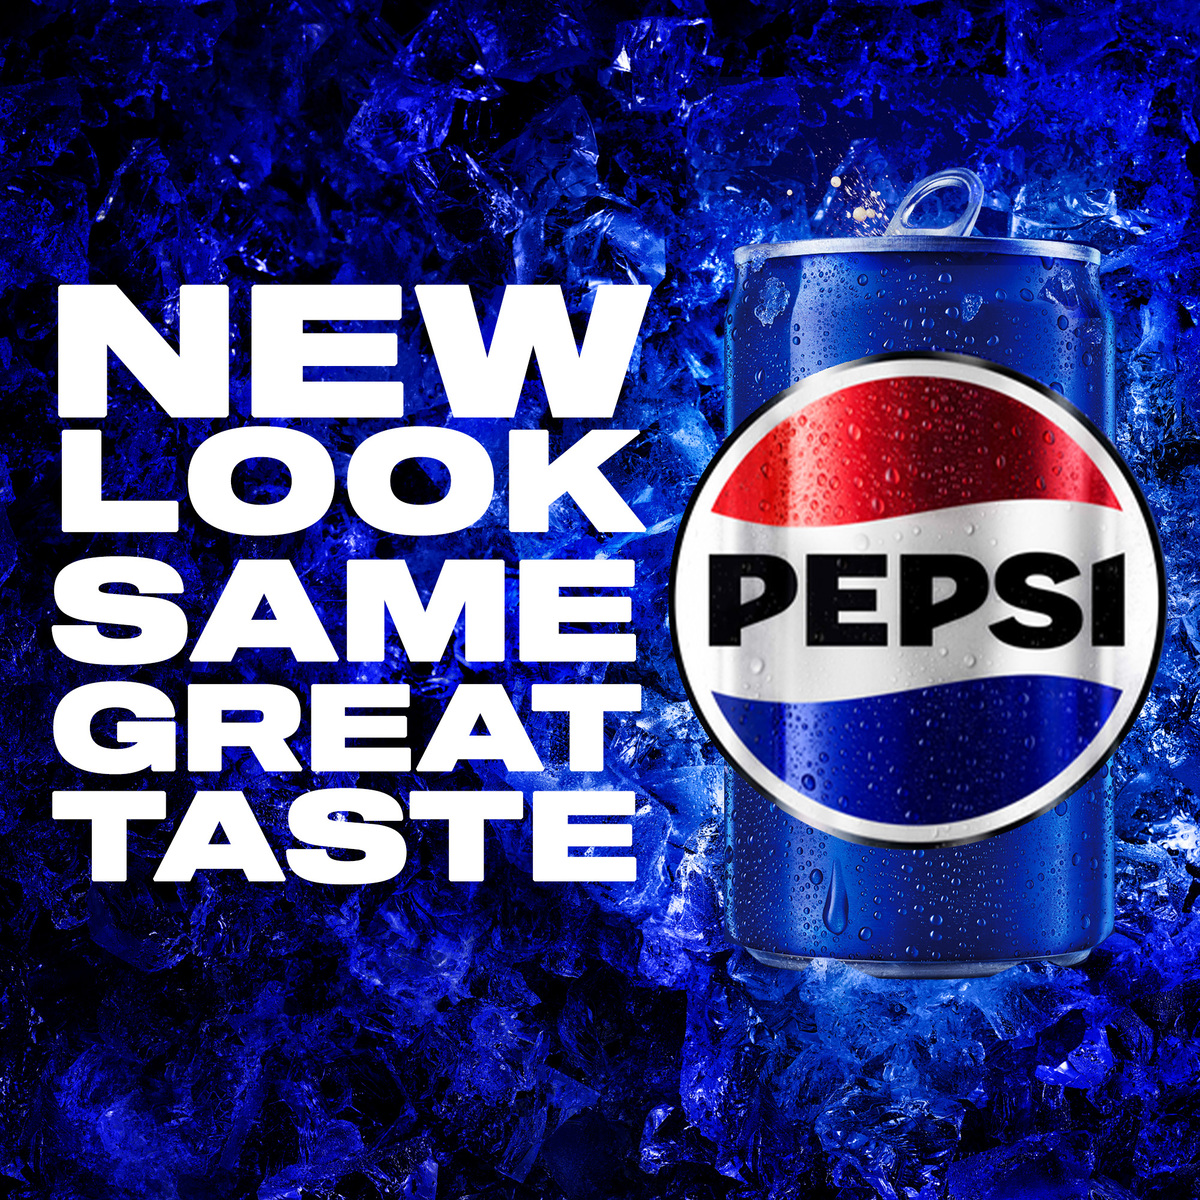 Pepsi Can Cola Beverage 155 ml